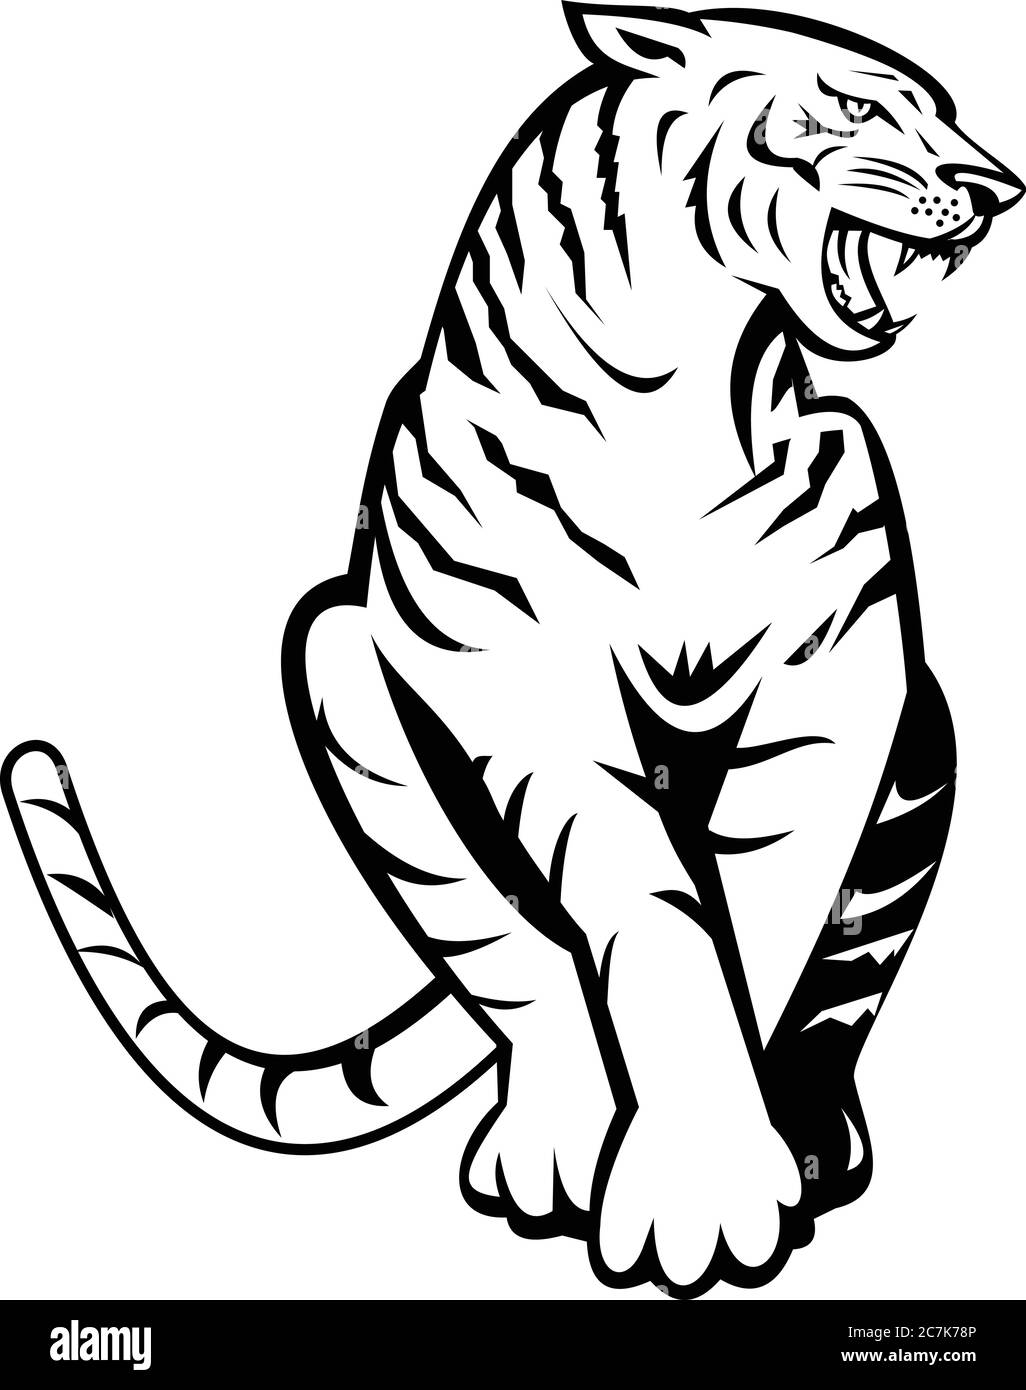 Panthera tigris tigris on white Stock Vector Images - Alamy